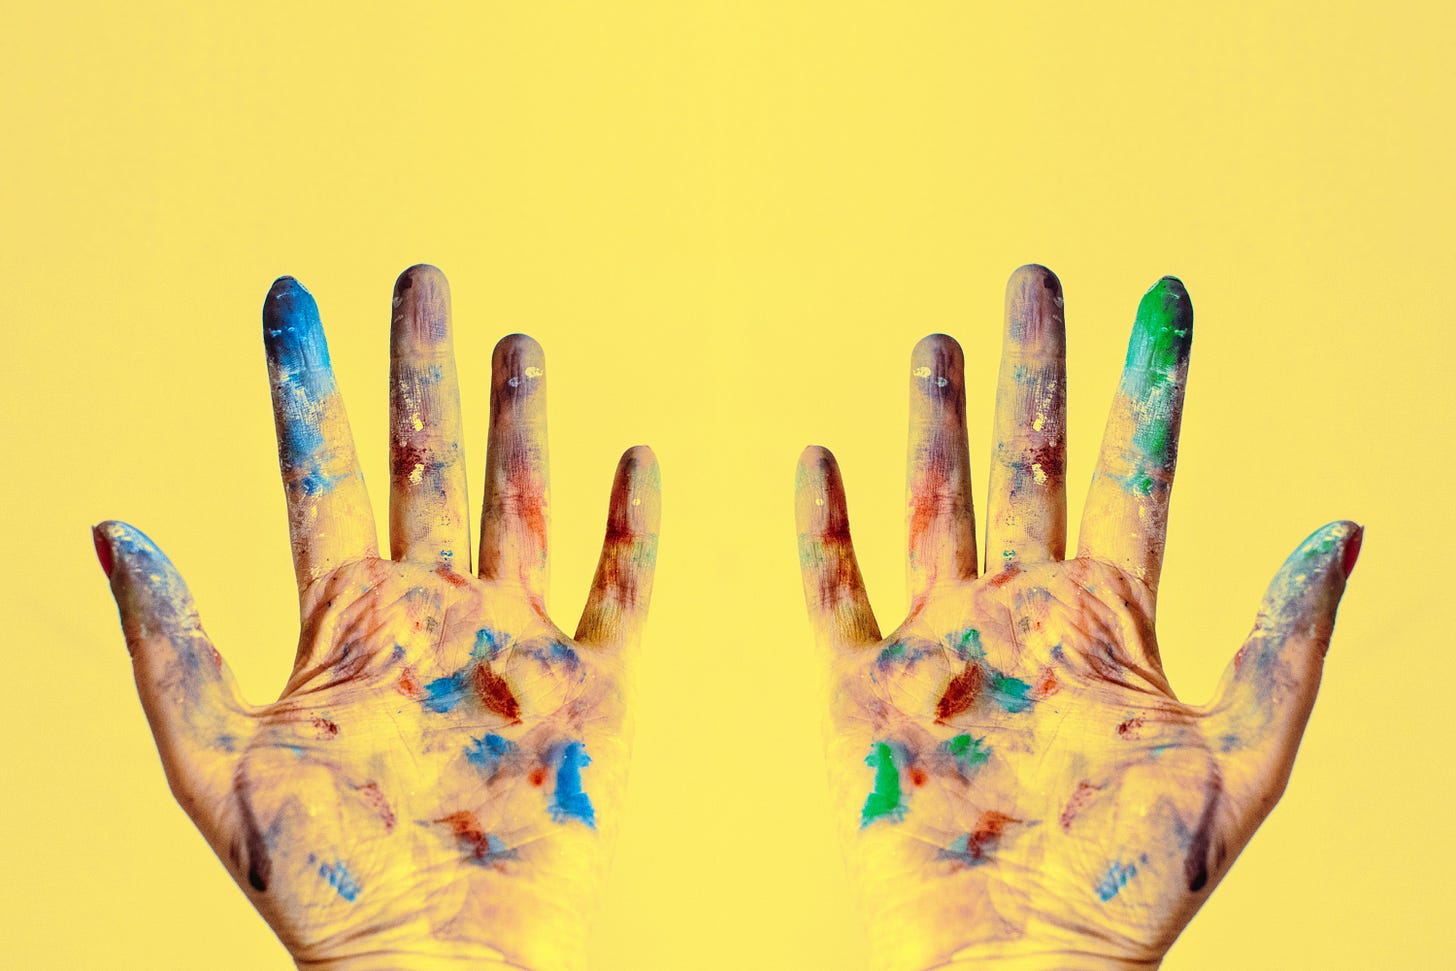 duas mãos, sujas de tinta de diversas cores no fundo amarelo